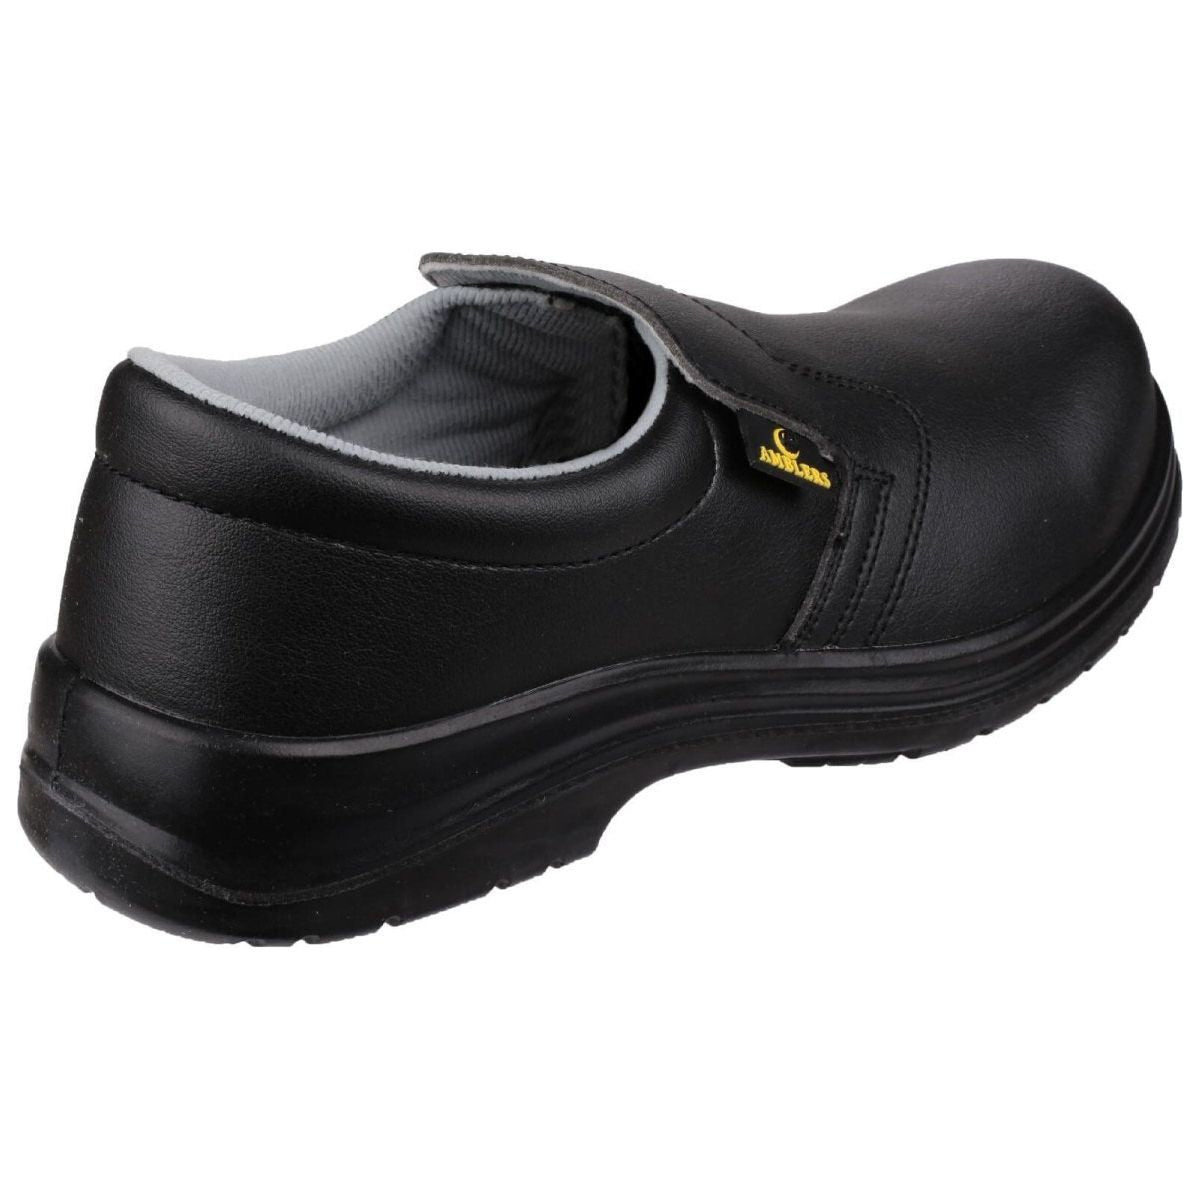 Amblers Fs661 Lightweight Safety Shoes Mens - workweargurus.com